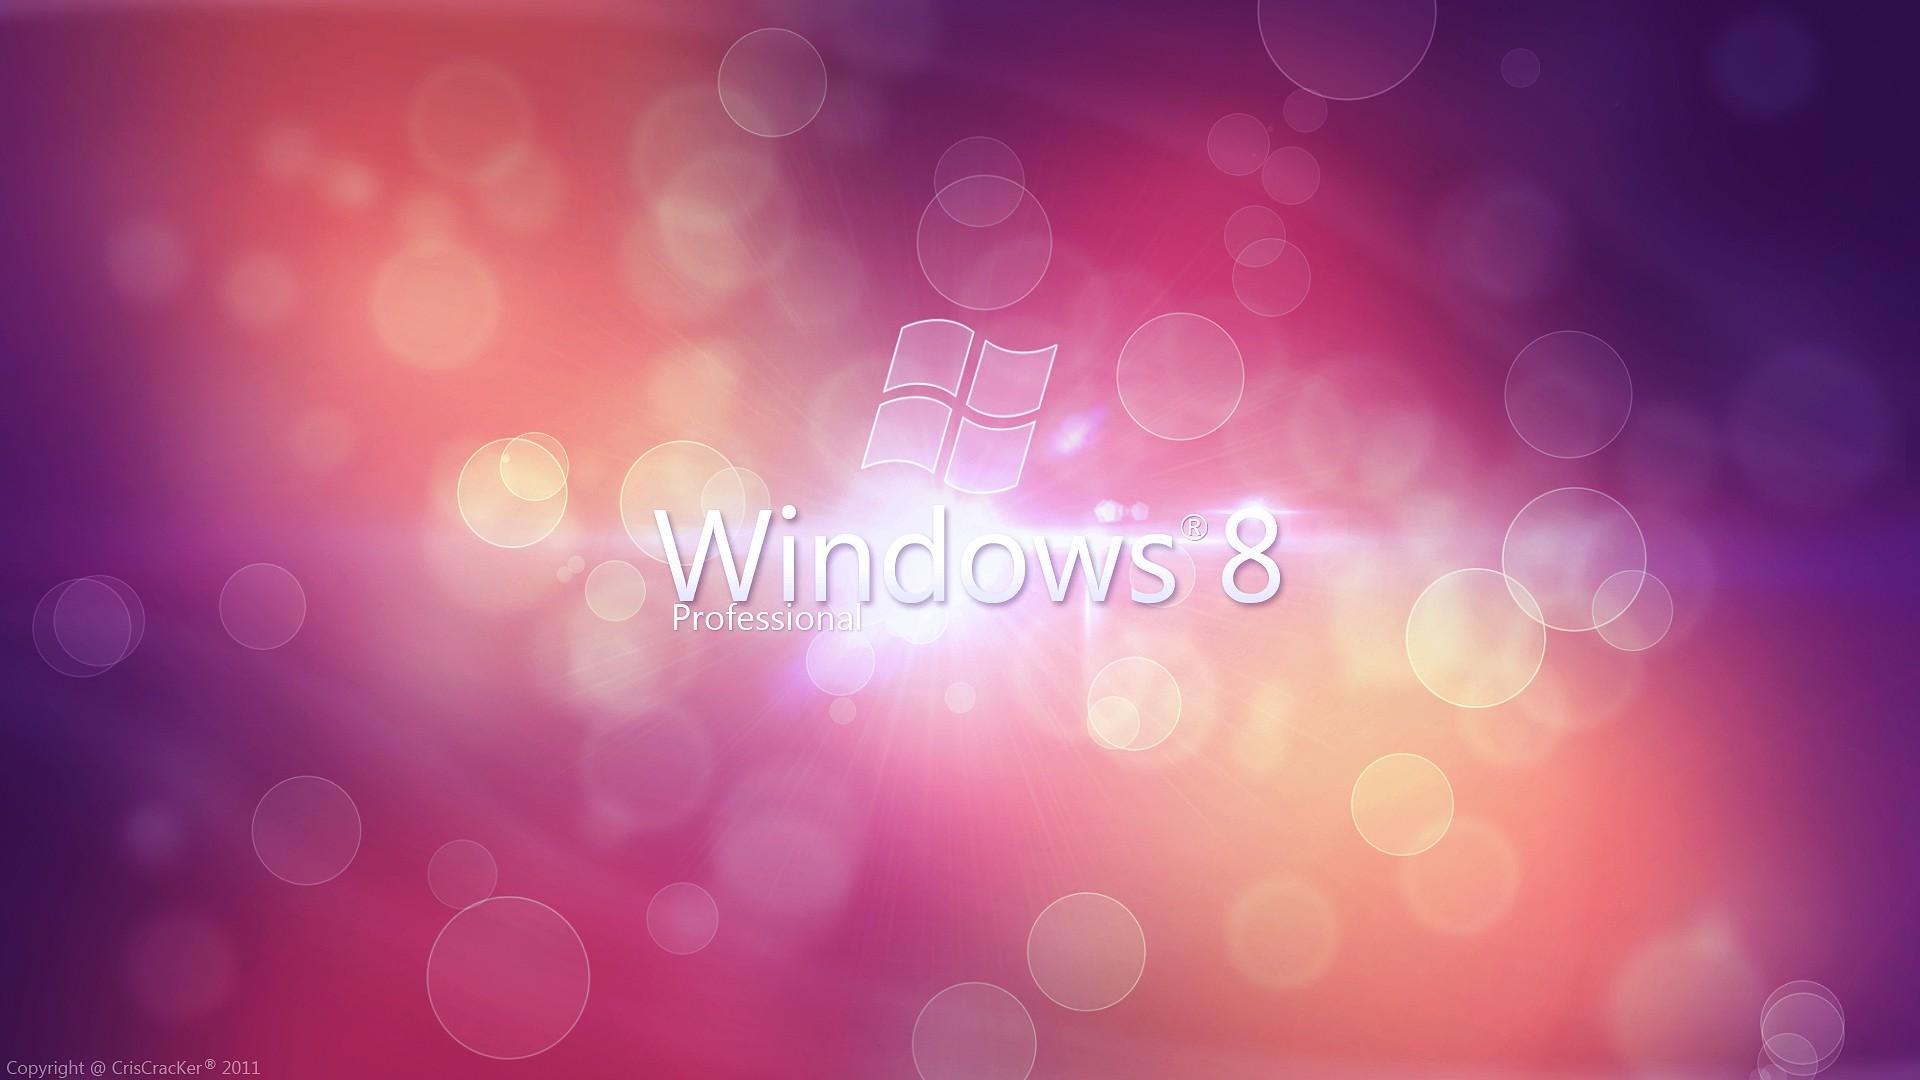 Microsoft theme windows 8 backgrounds brands wallpaper | (41703)